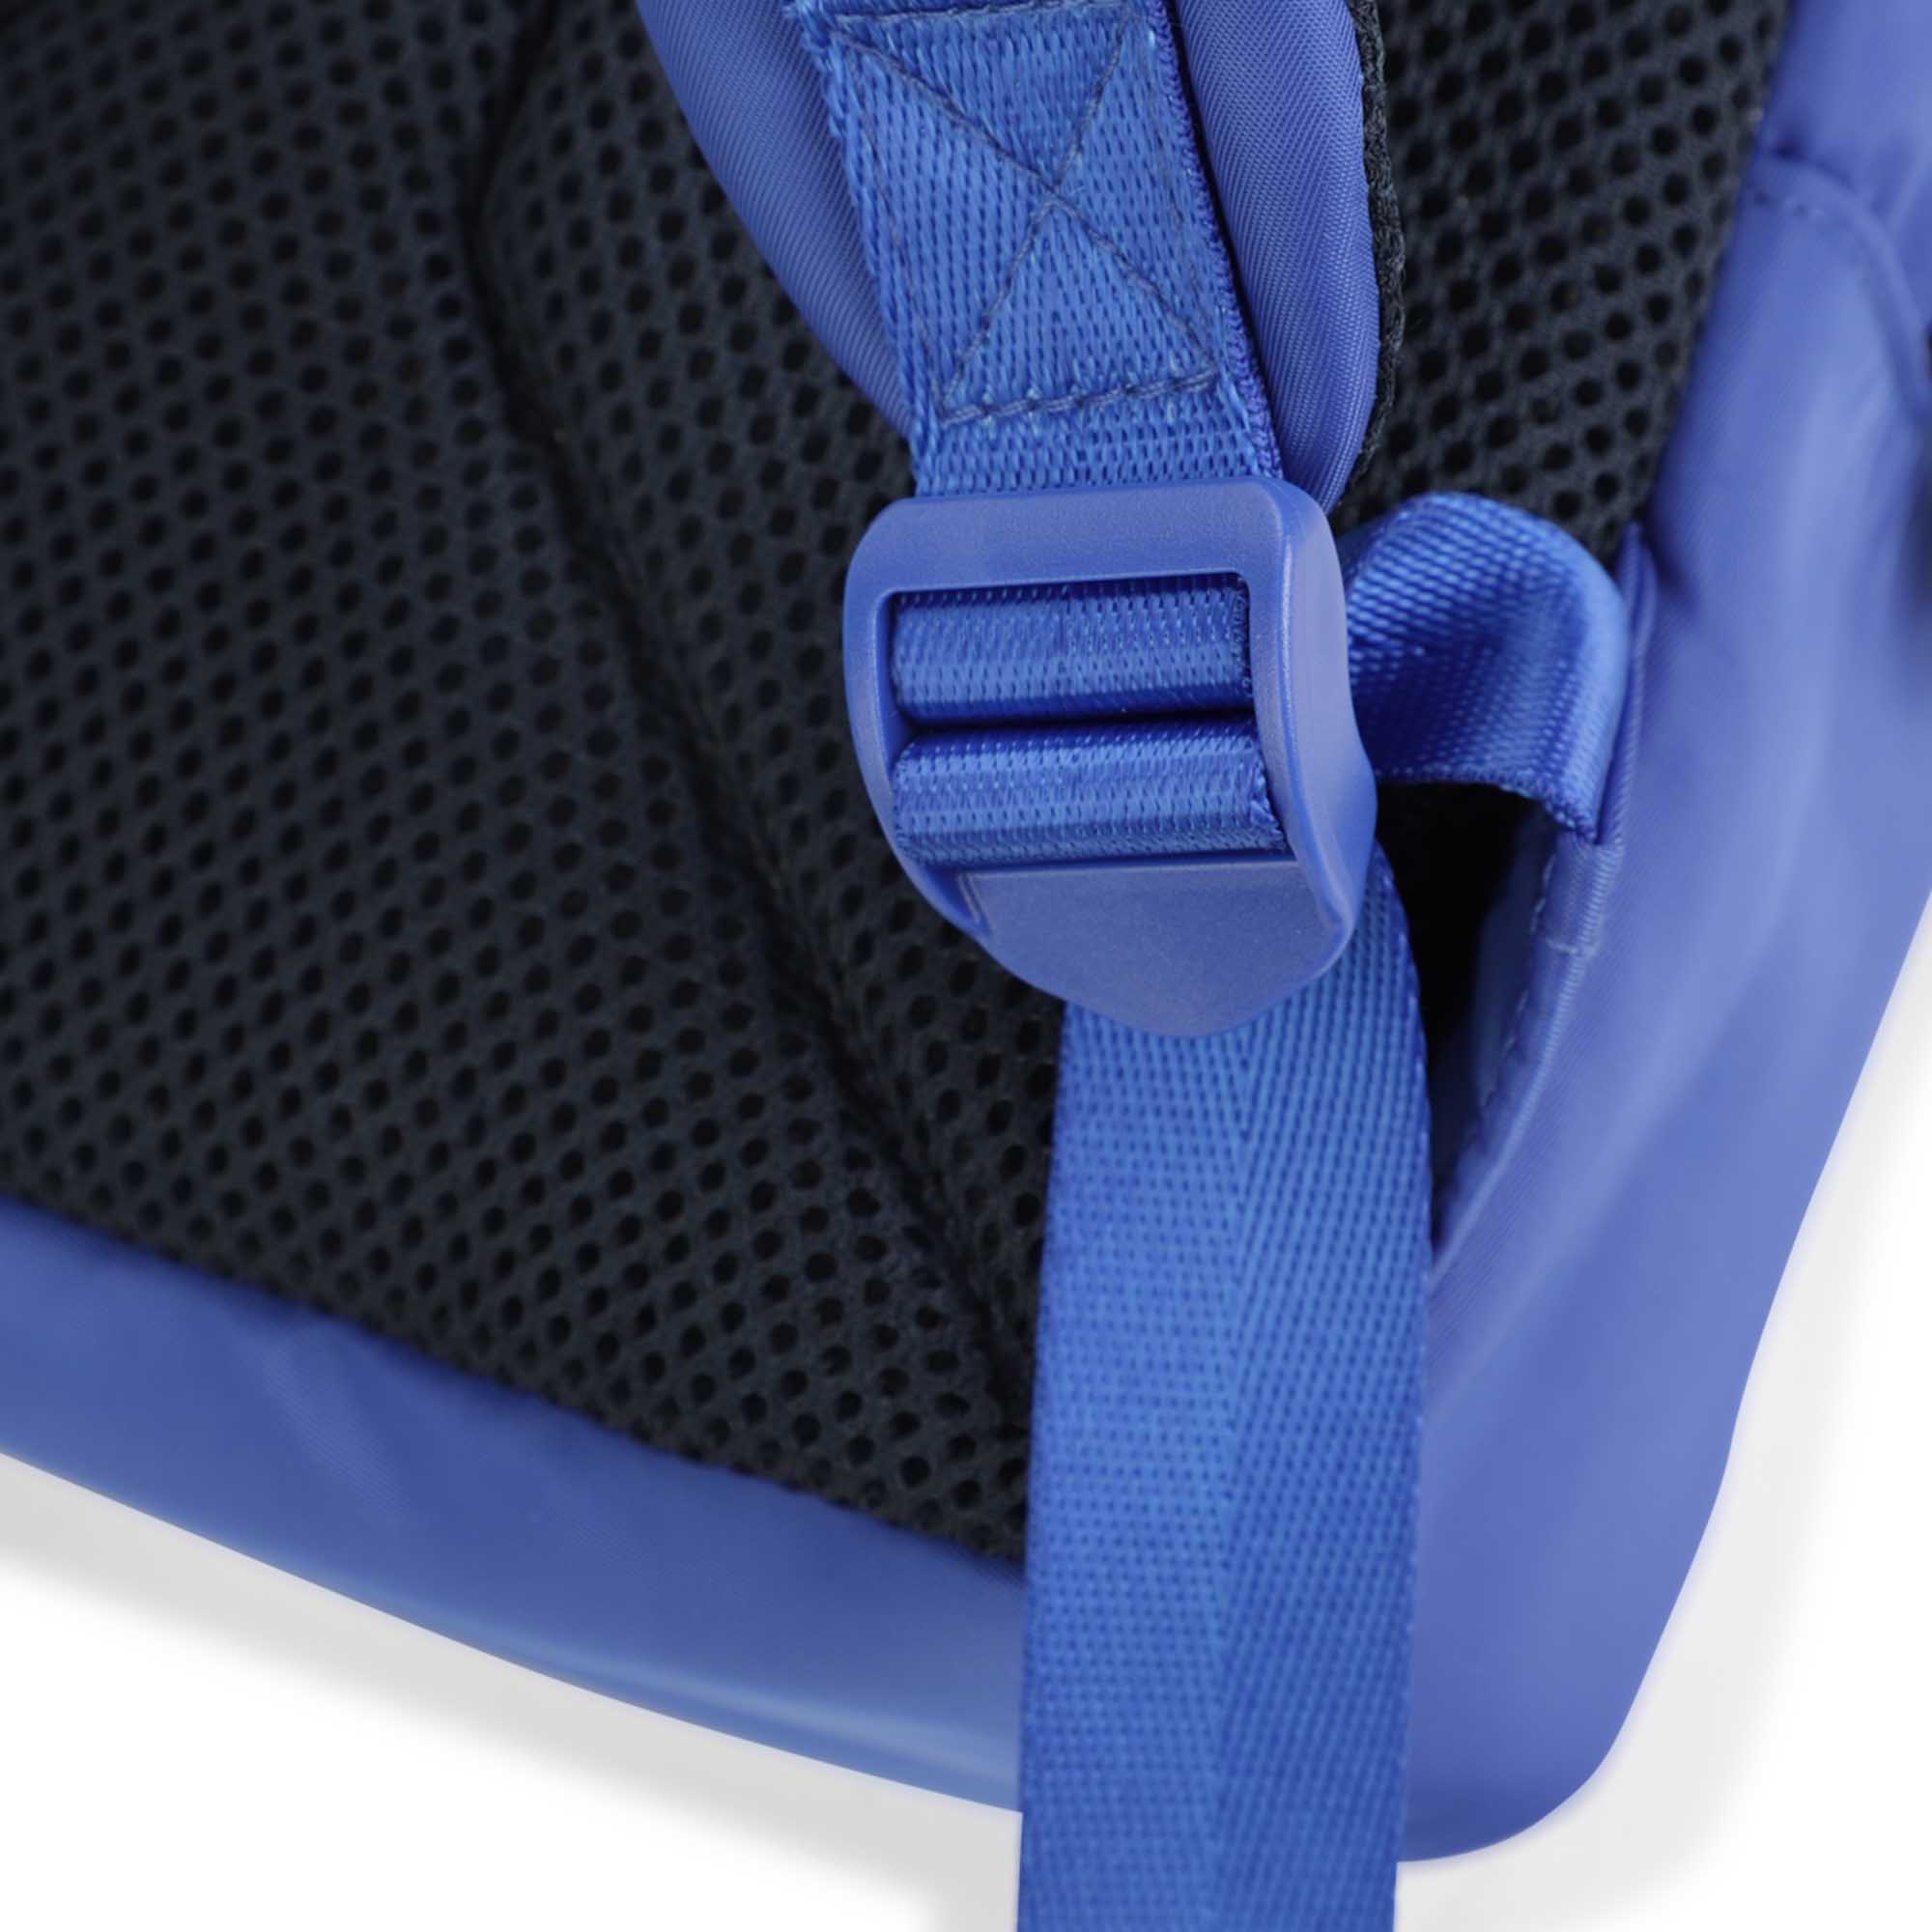 Bi-Fabric Backpack BOSS for BOY